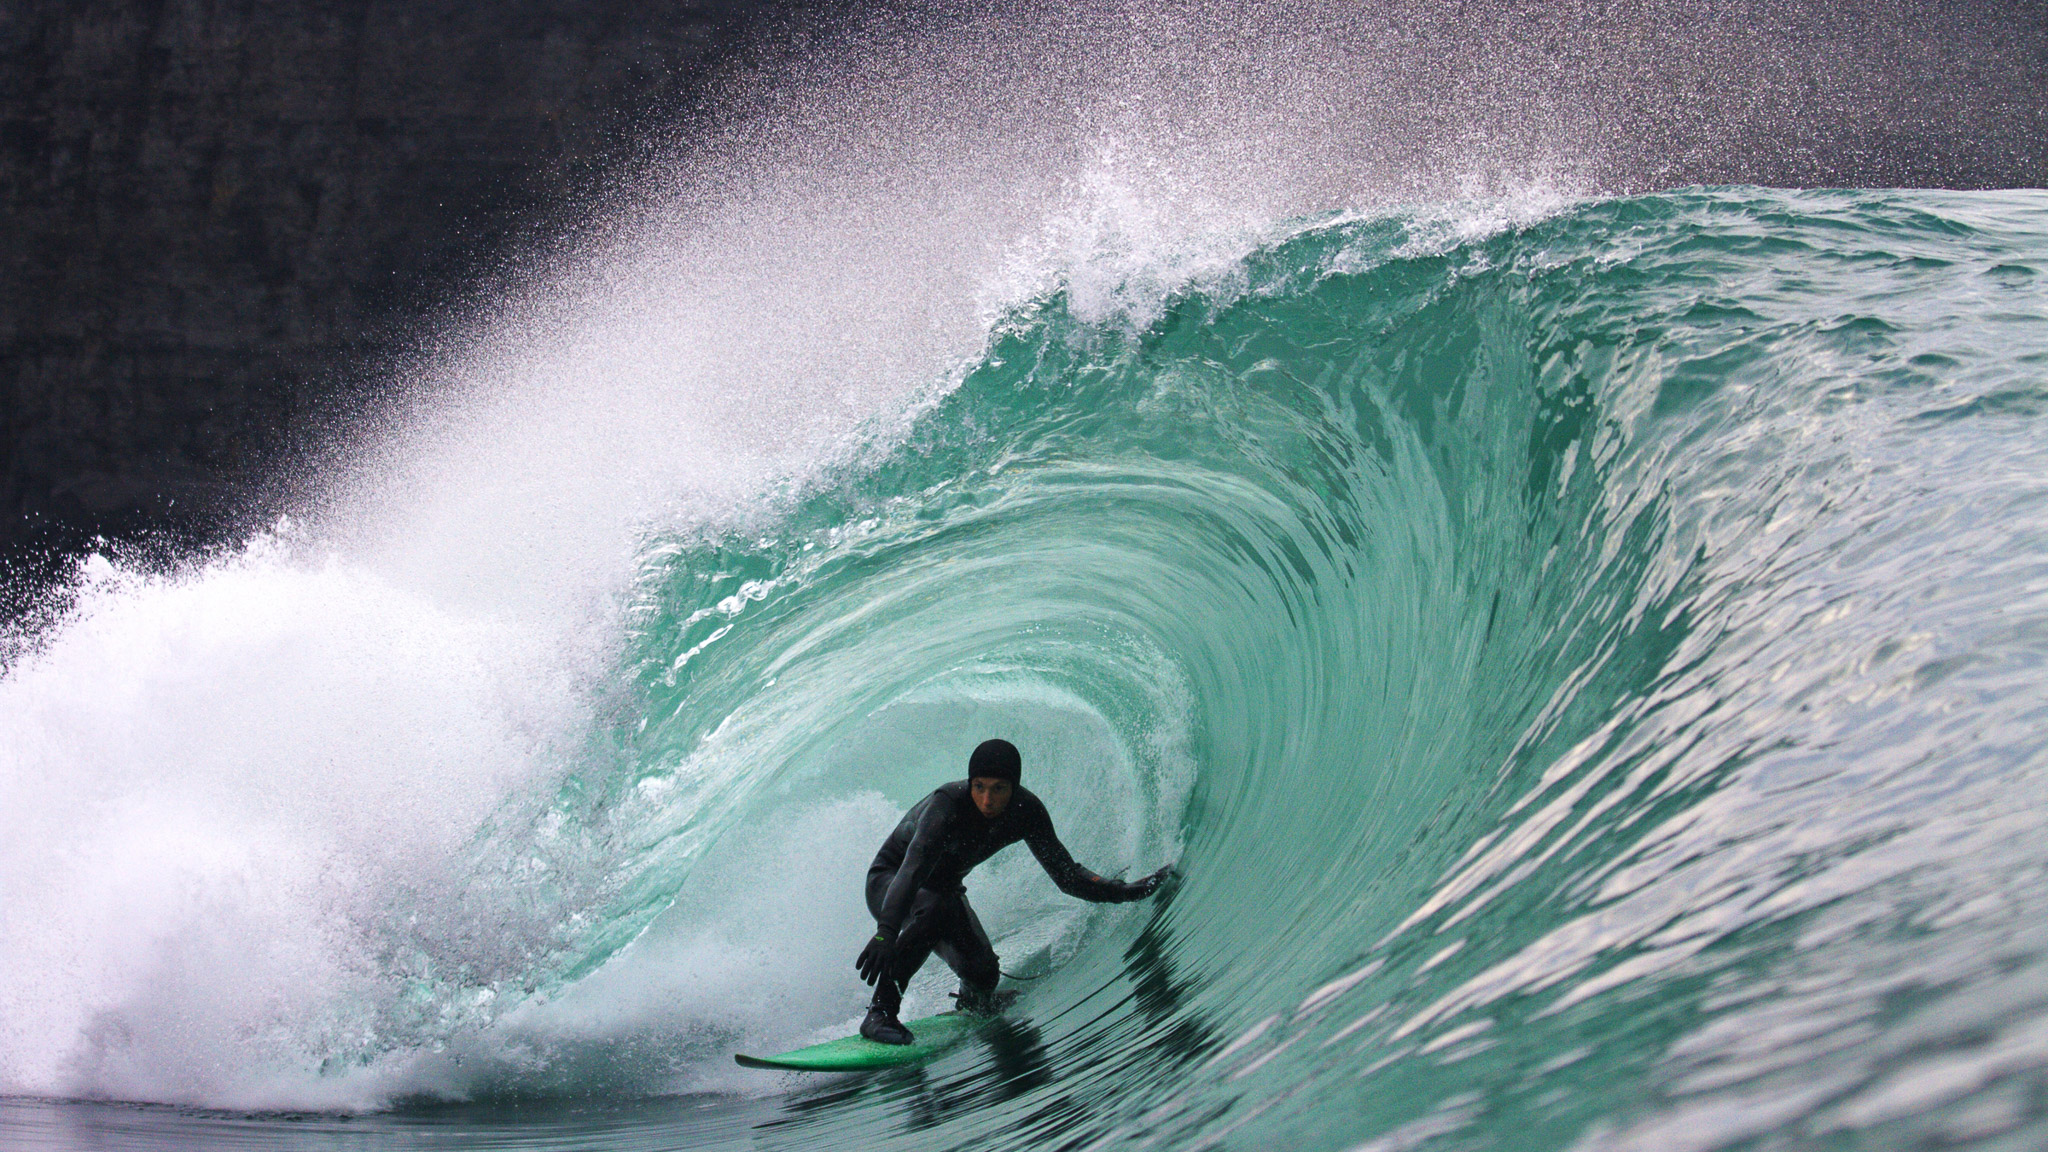 Go inside the Irish surf scene-Inside the Irish surf scene